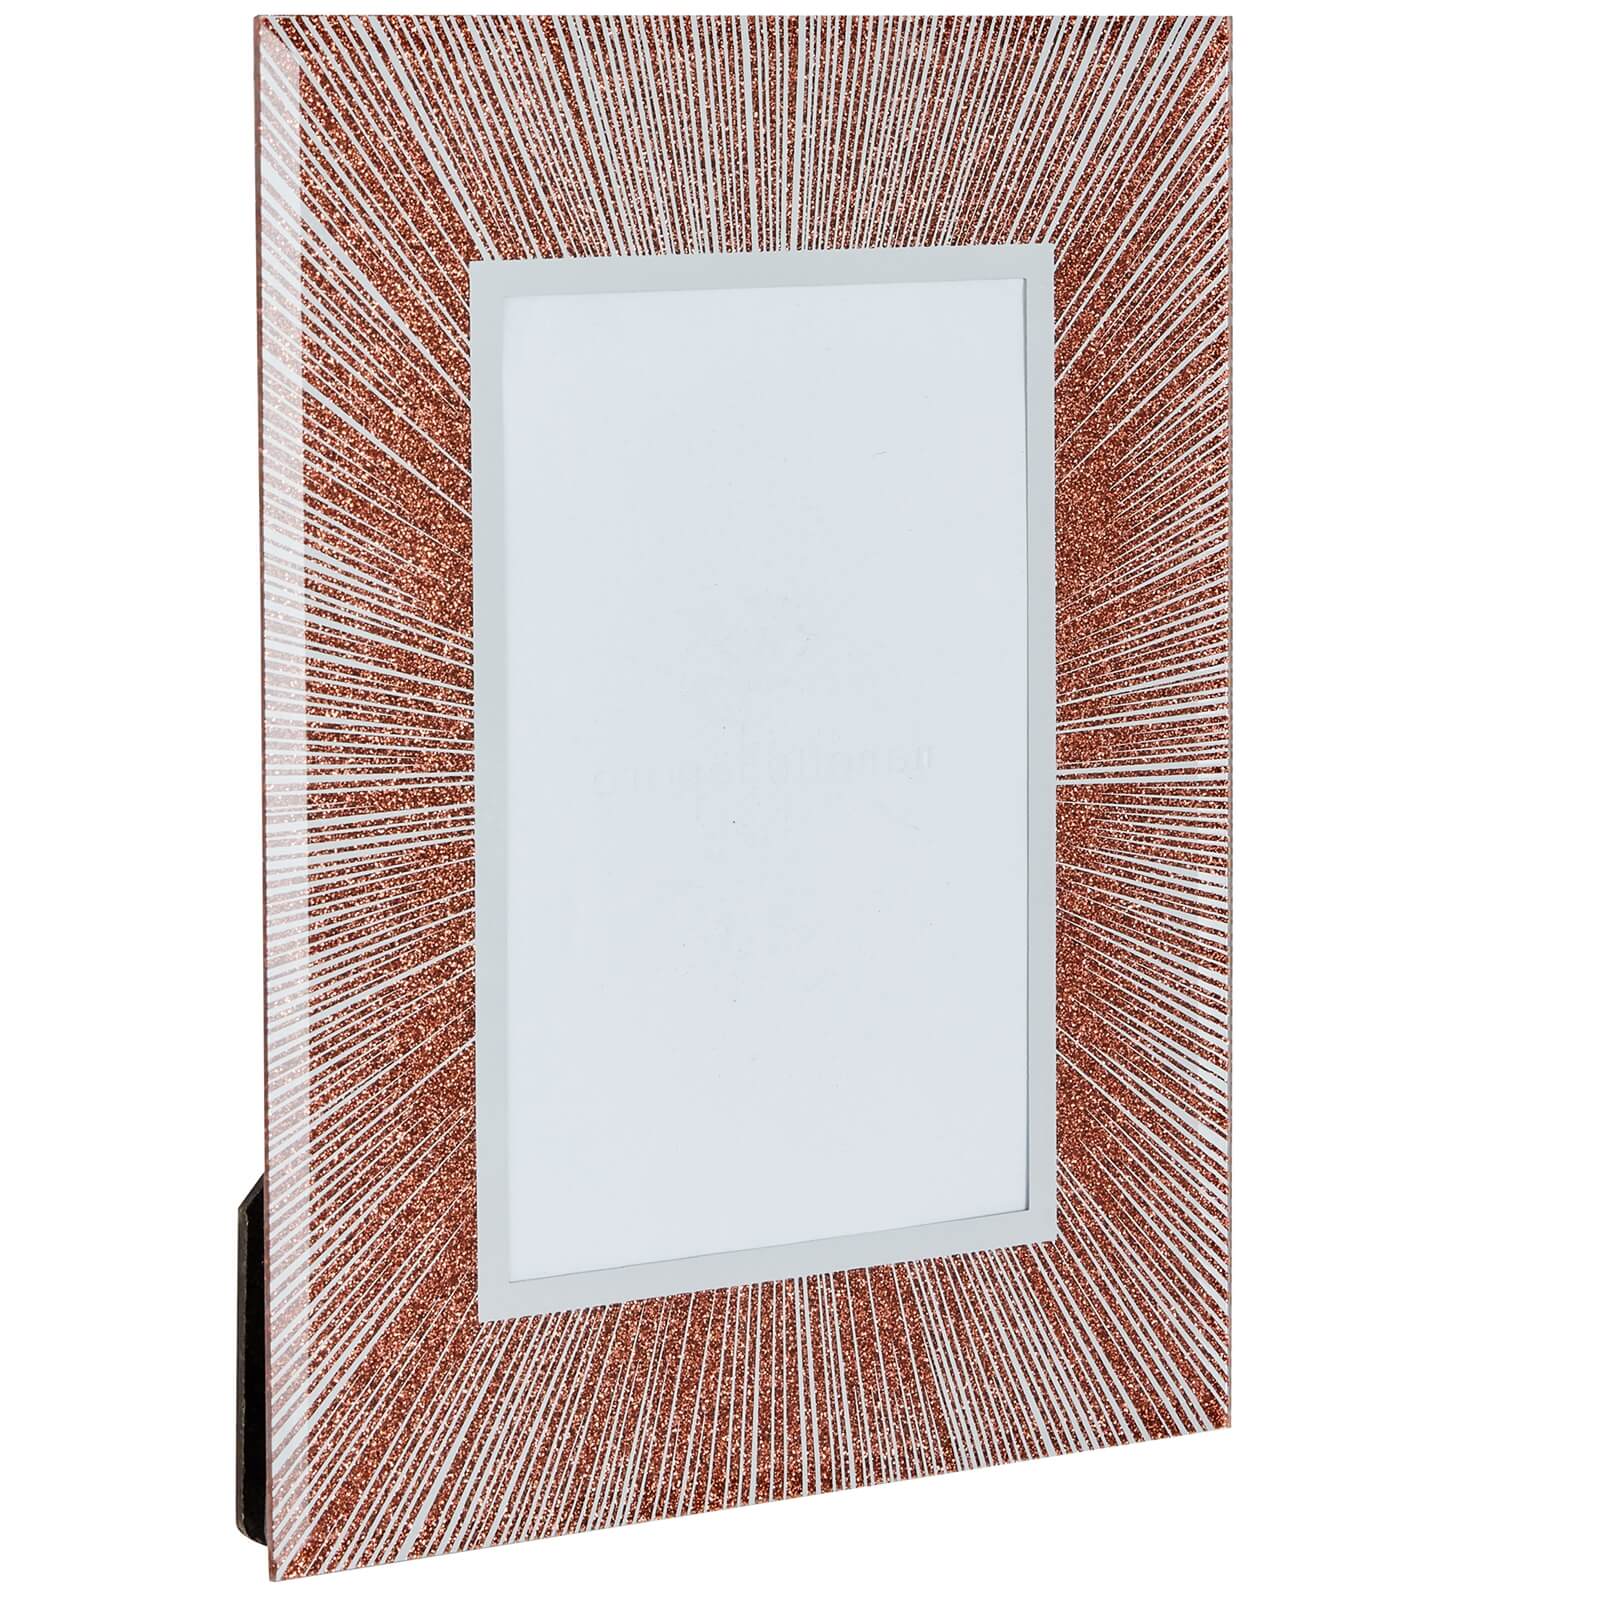 Glitter Picture Frame 6 x 4 - Copper